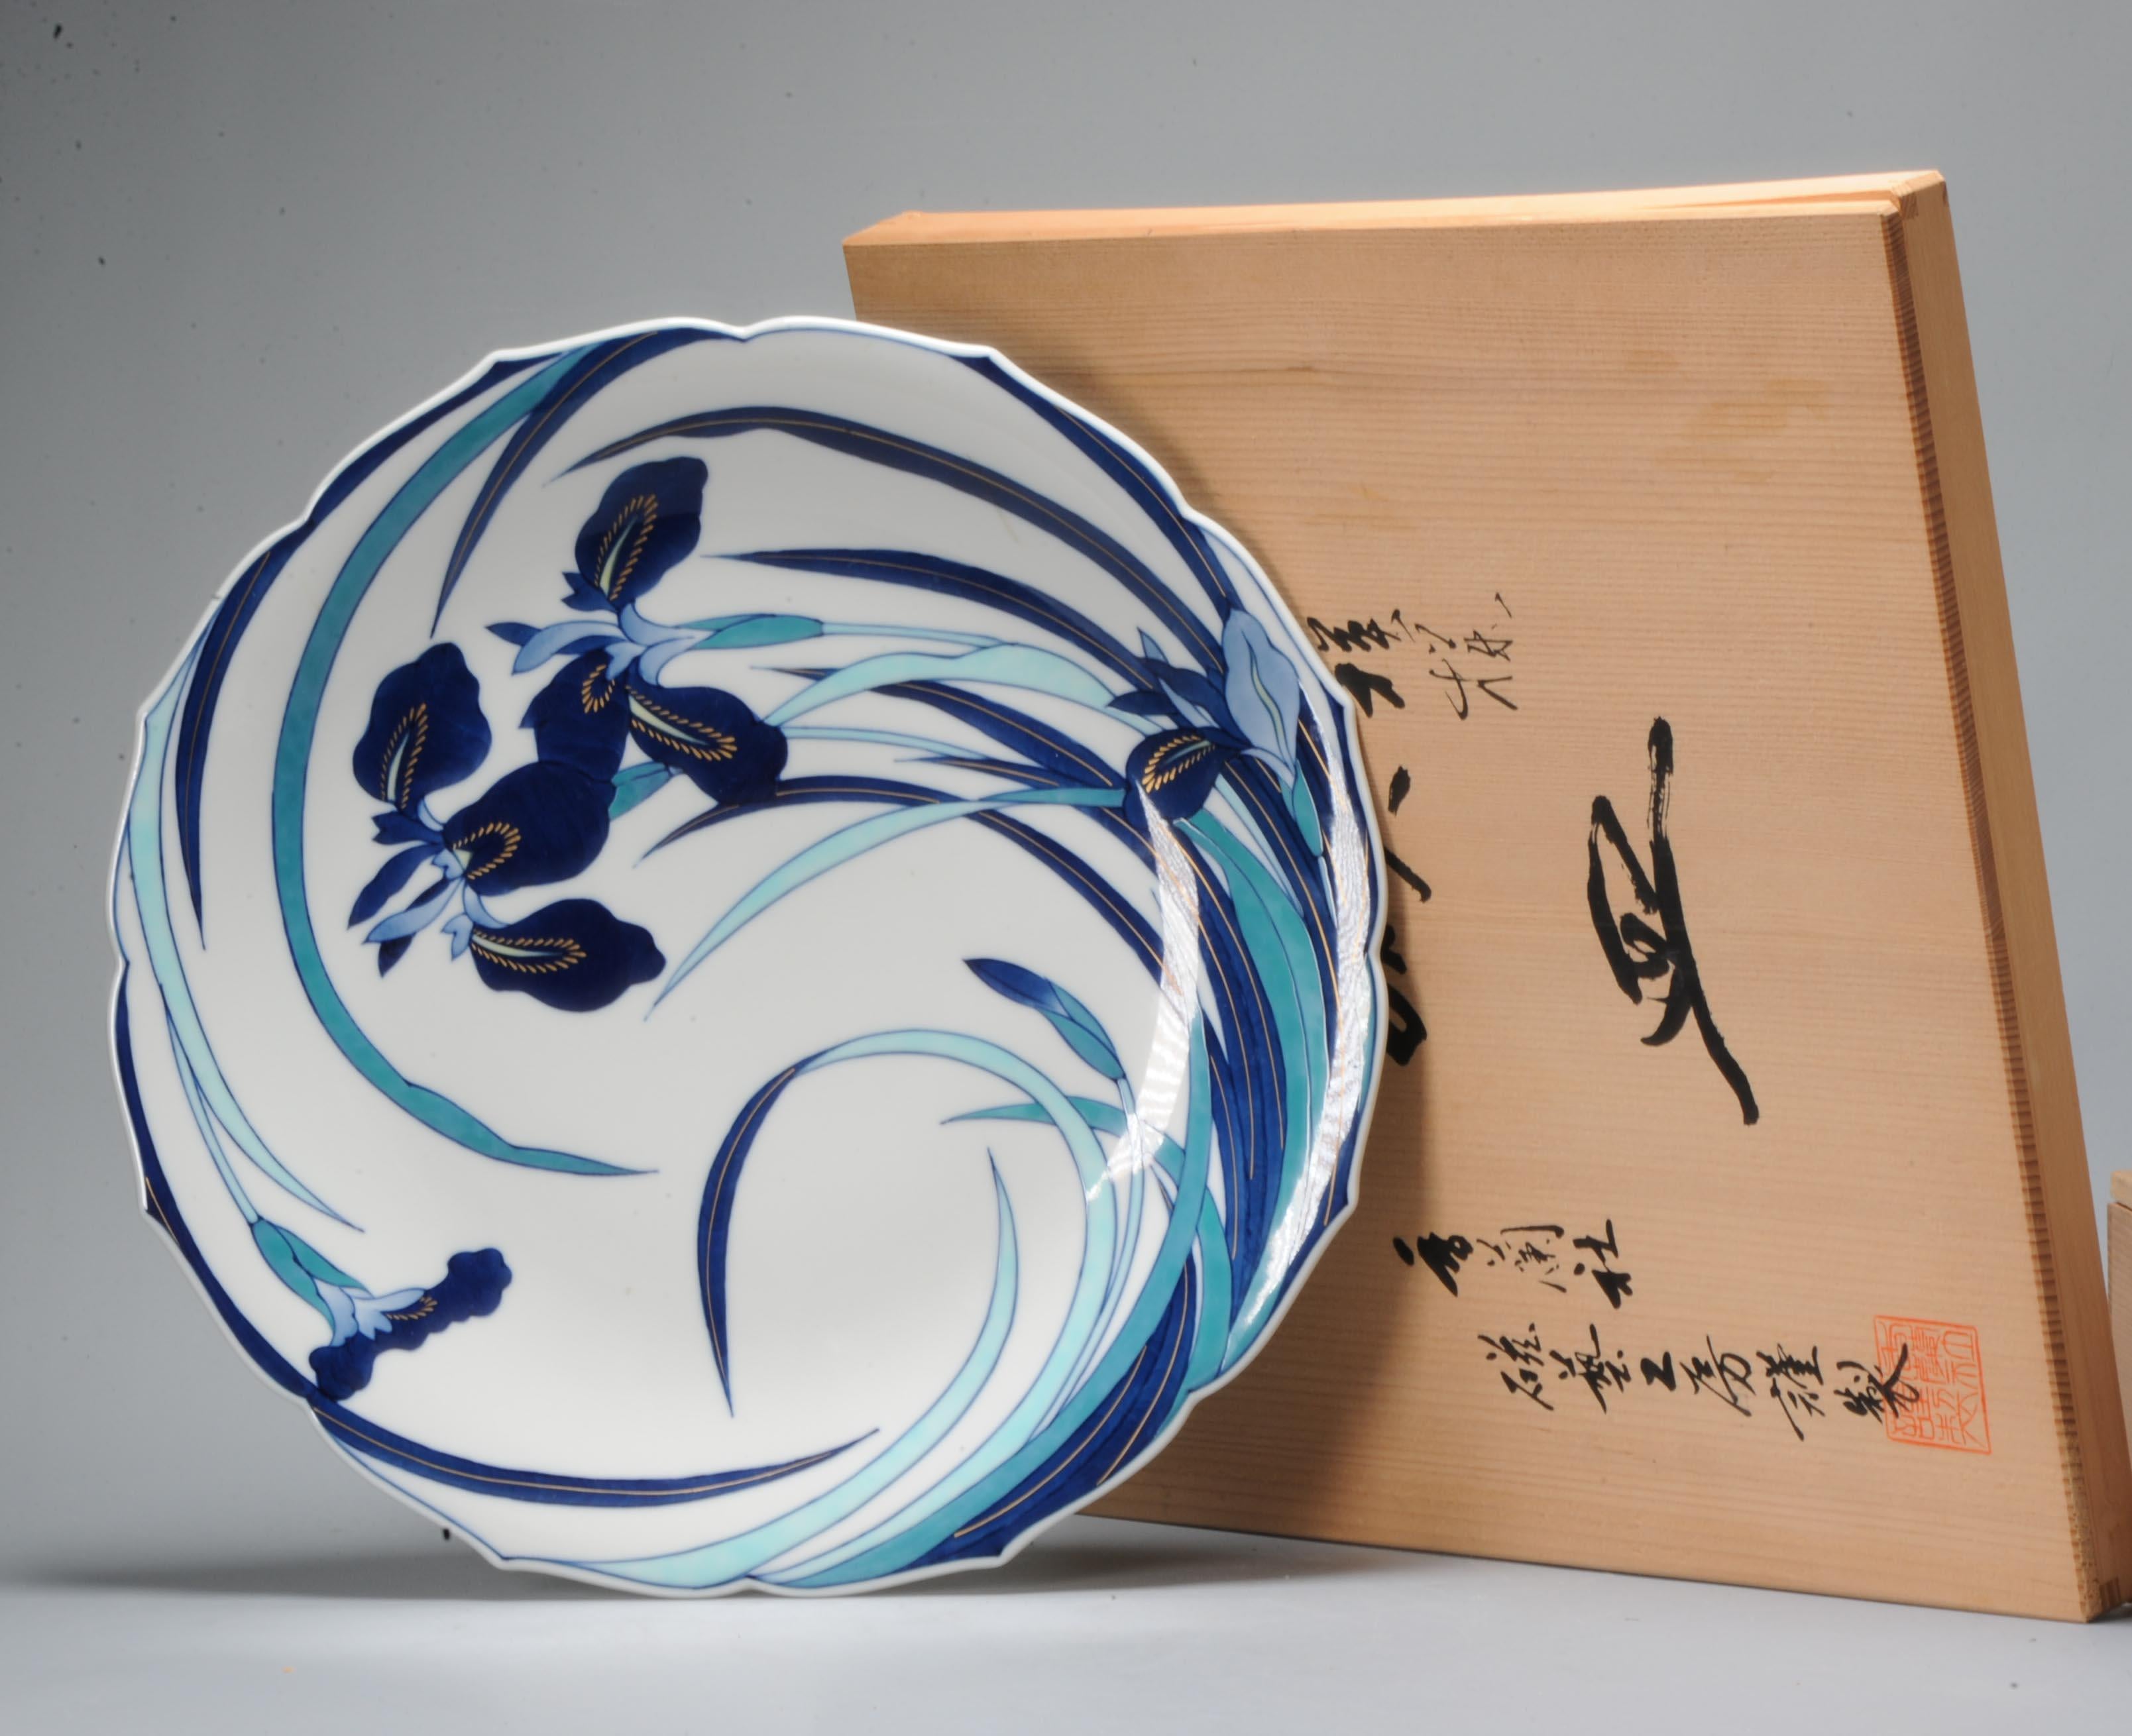 Sharing with you this amazing Large Japanese Koransha plate. Top quality.